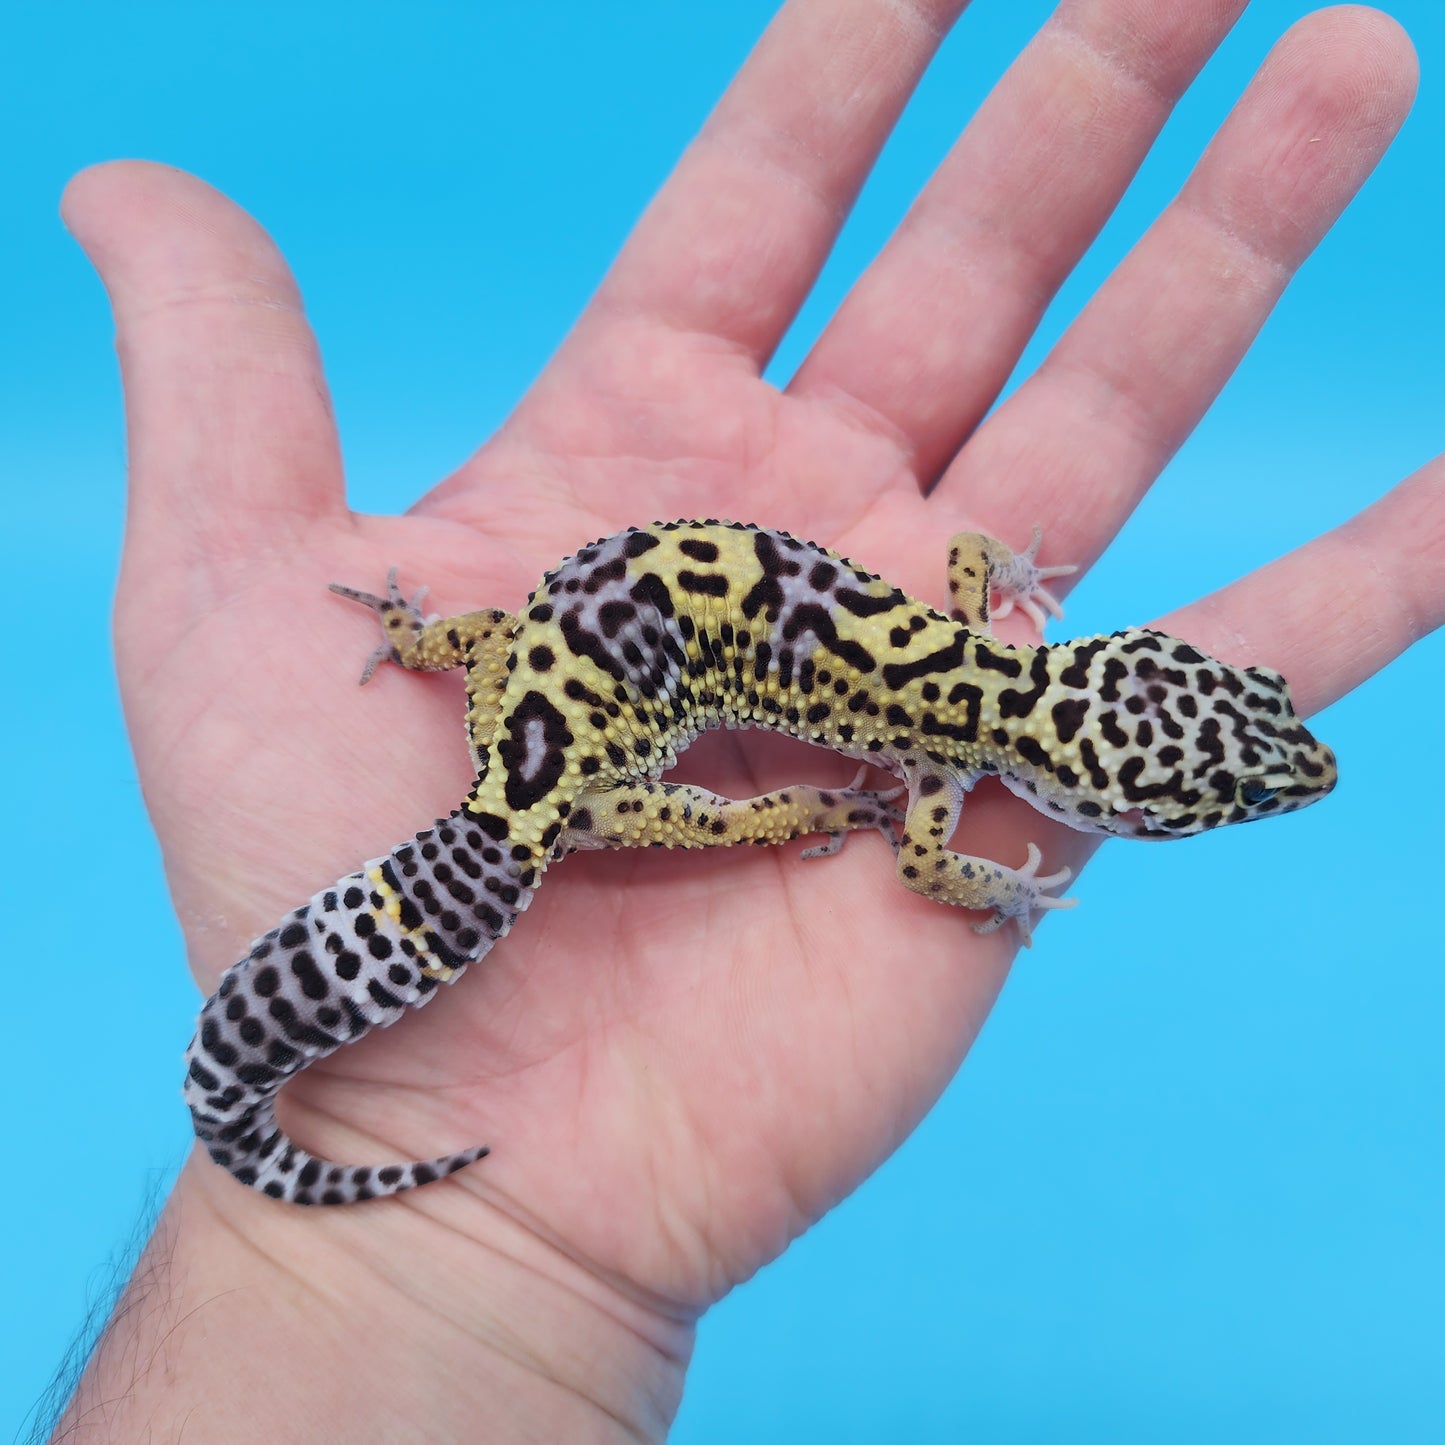 Female Black Night (50%) Afghanicus (25%) Turcmenicus (25%) Leopard Gecko (very unique!)